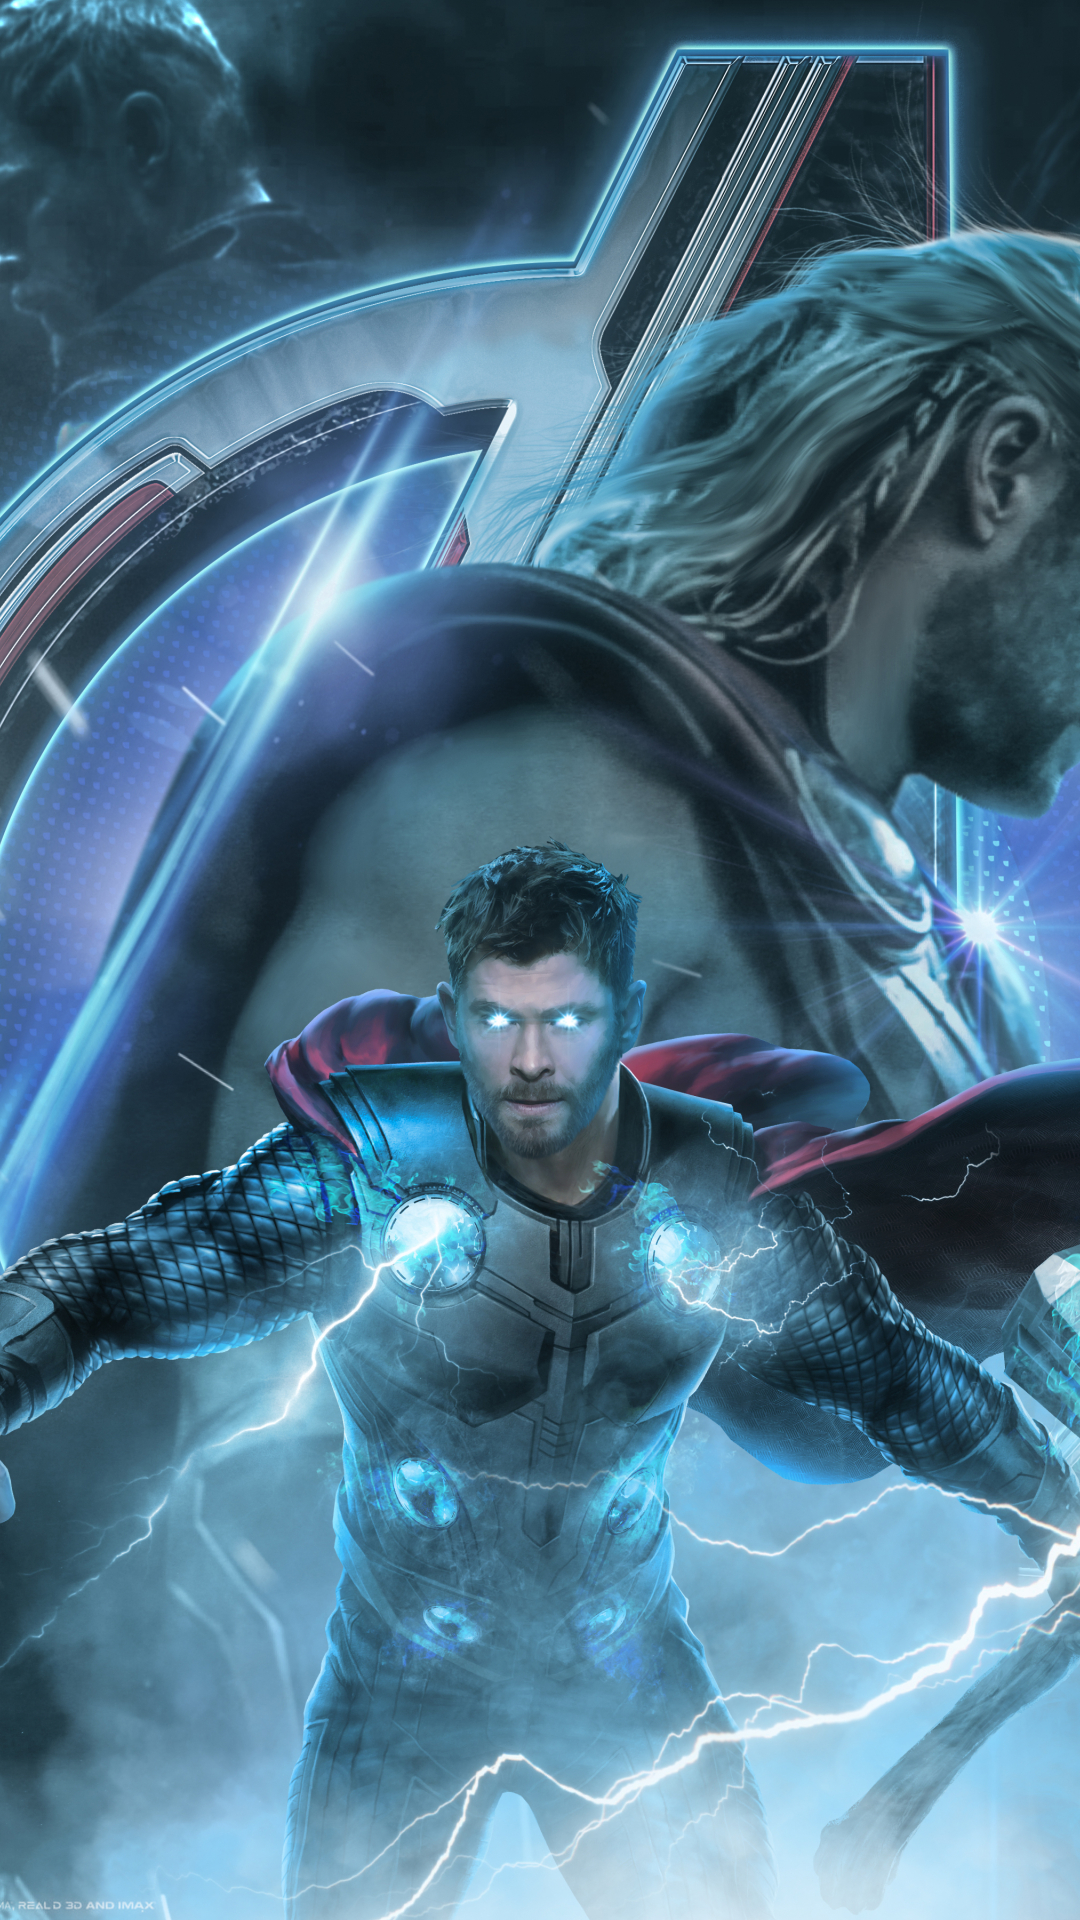 1080x1920 Avengers  Endgame  Thor Poster Artwork Iphone 7 